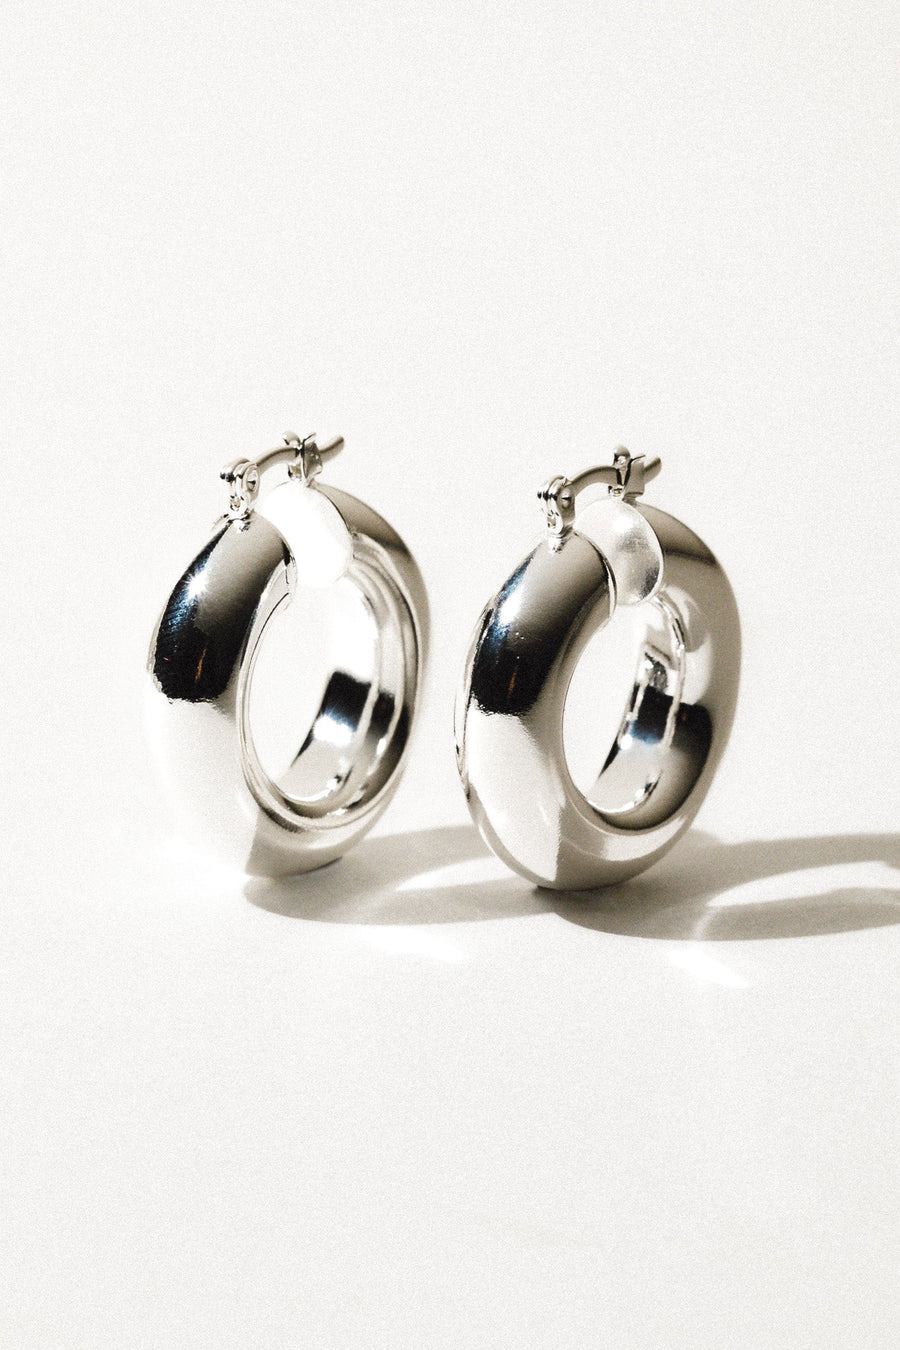 Dona Italia Jewelry Silver / SMALL Small Aubree Tube Hoops.:.Silver